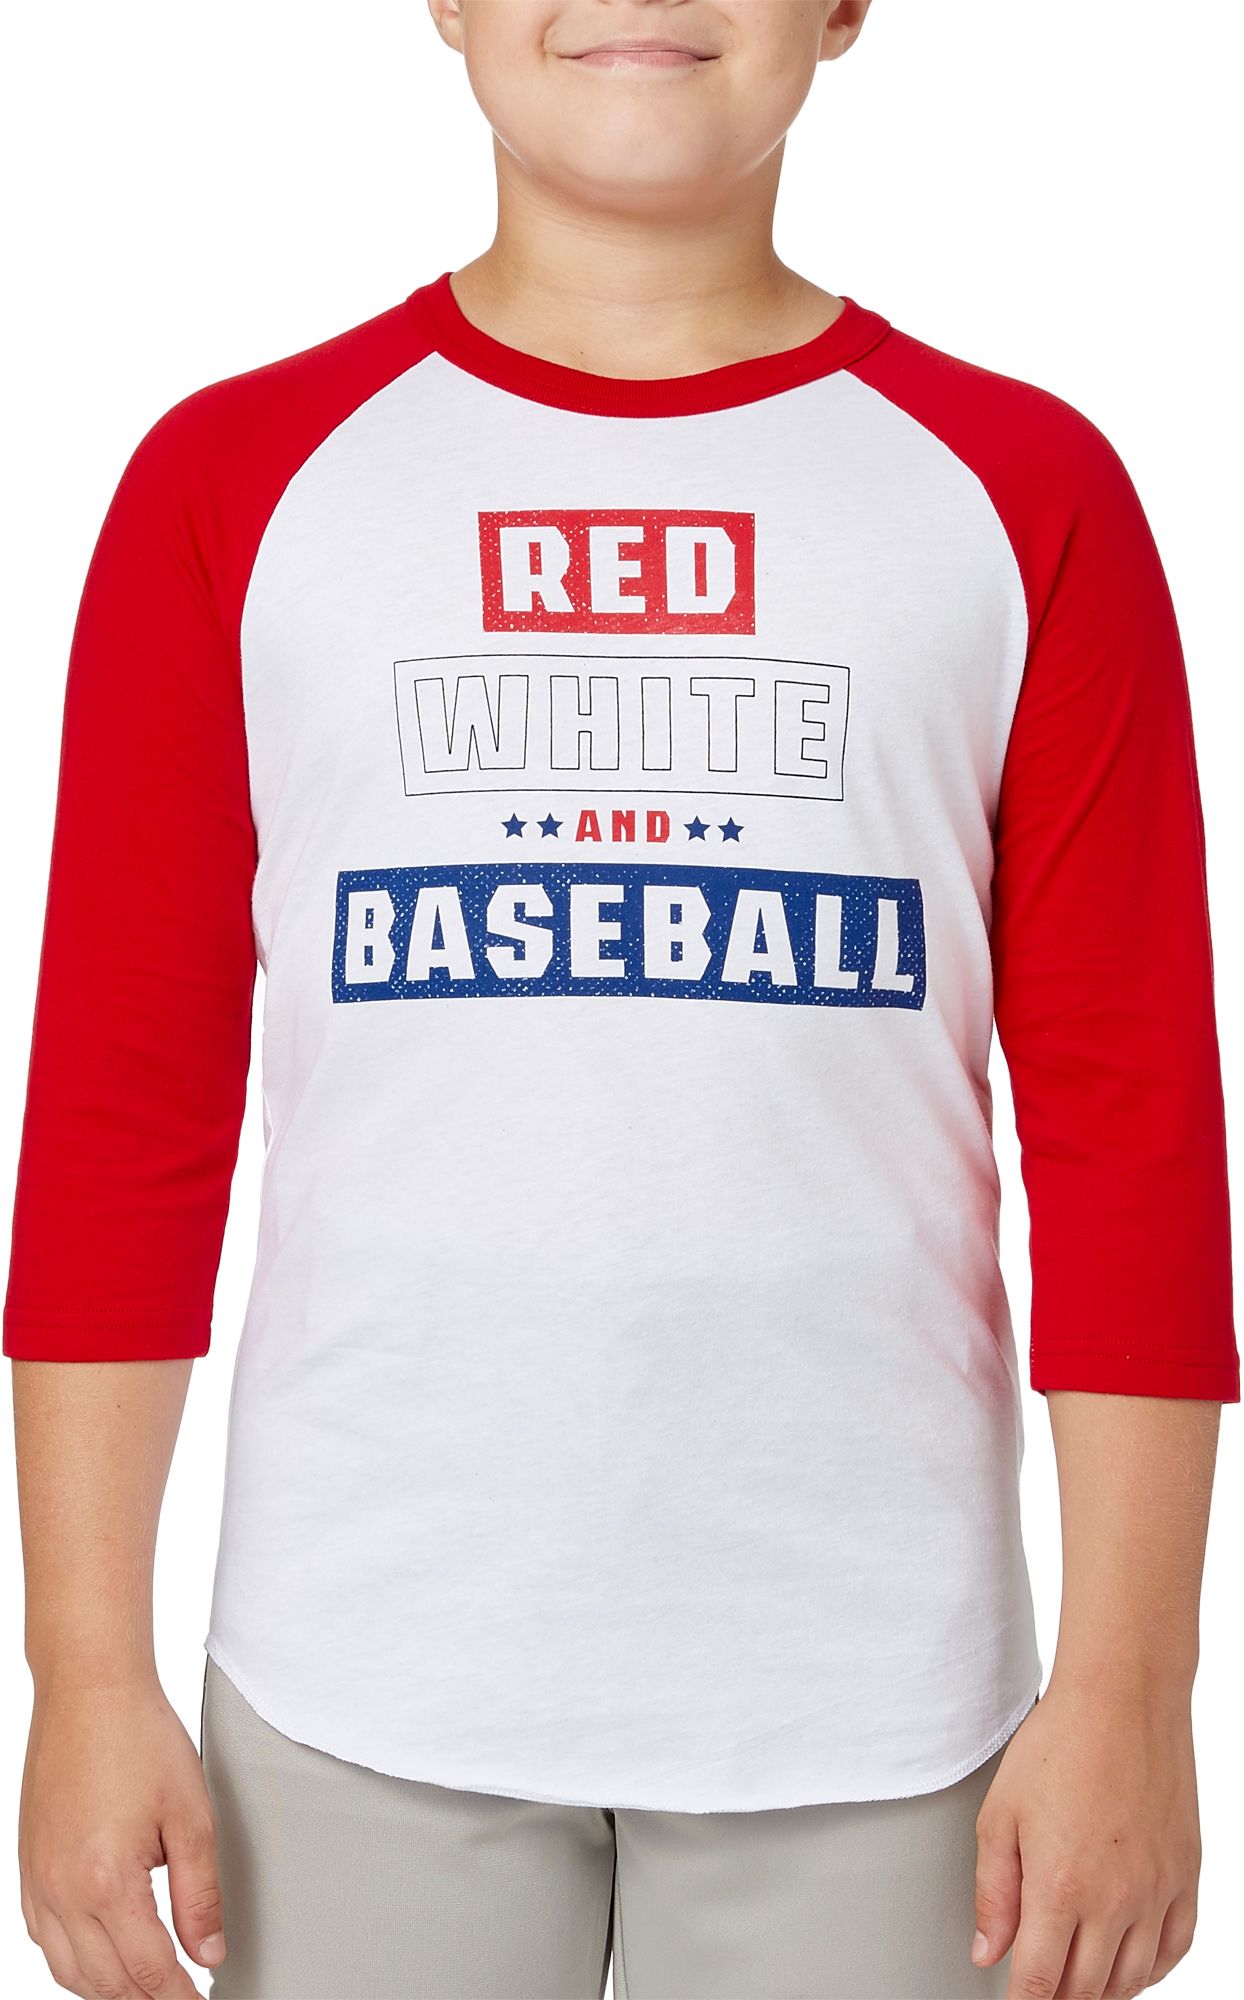 red and white adidas shirt